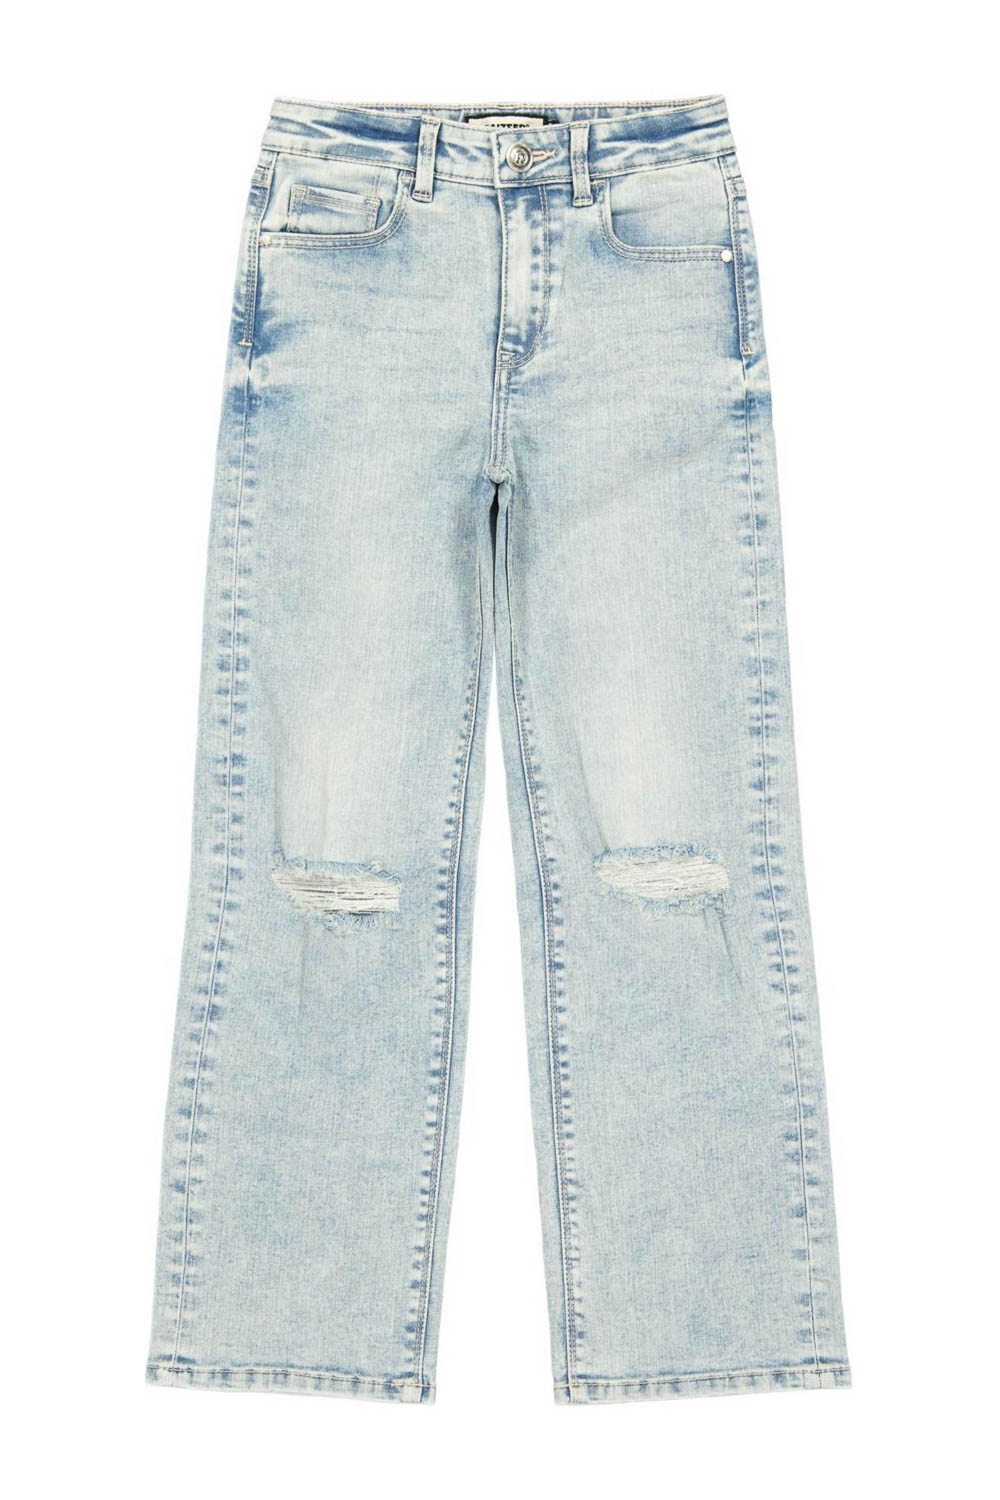 Raizzed Ki Sydney Jeans